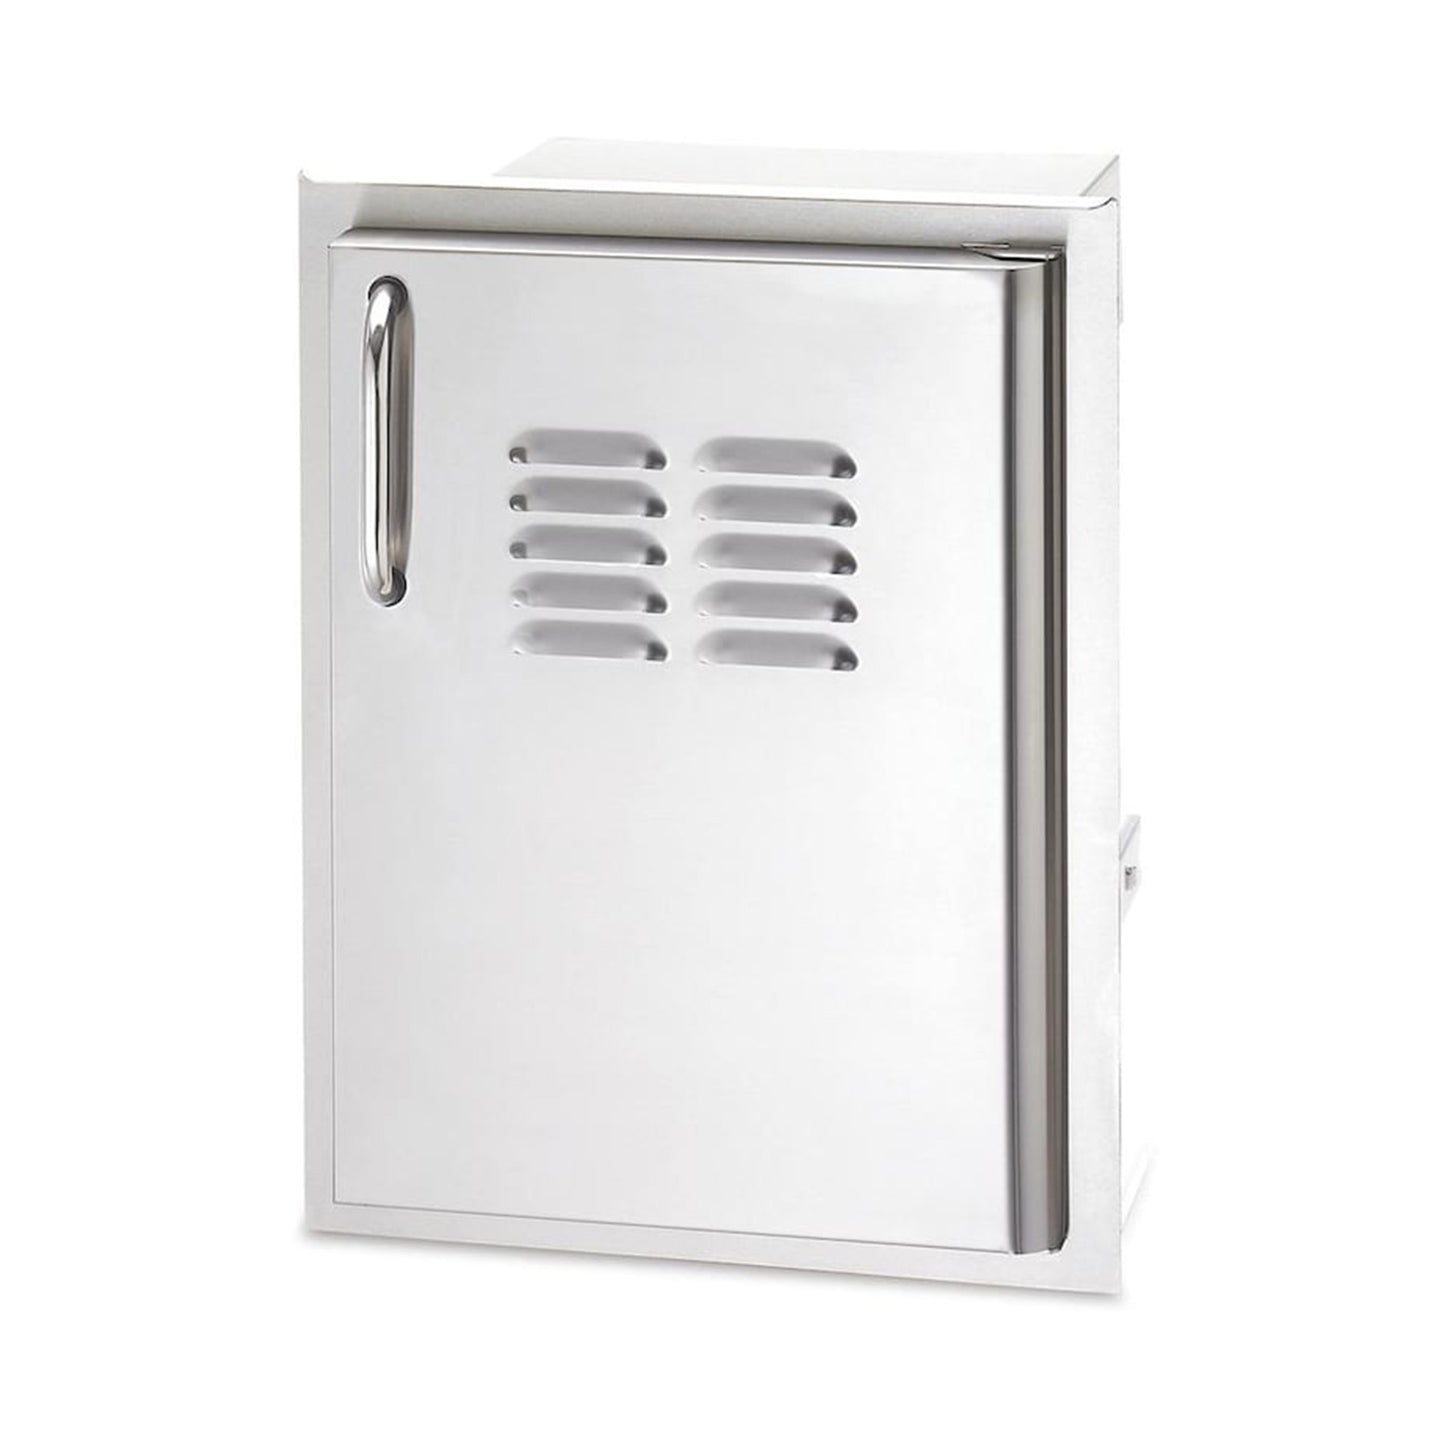 AOG Vertical Single Access Doors w/ Stainless Steel Handles